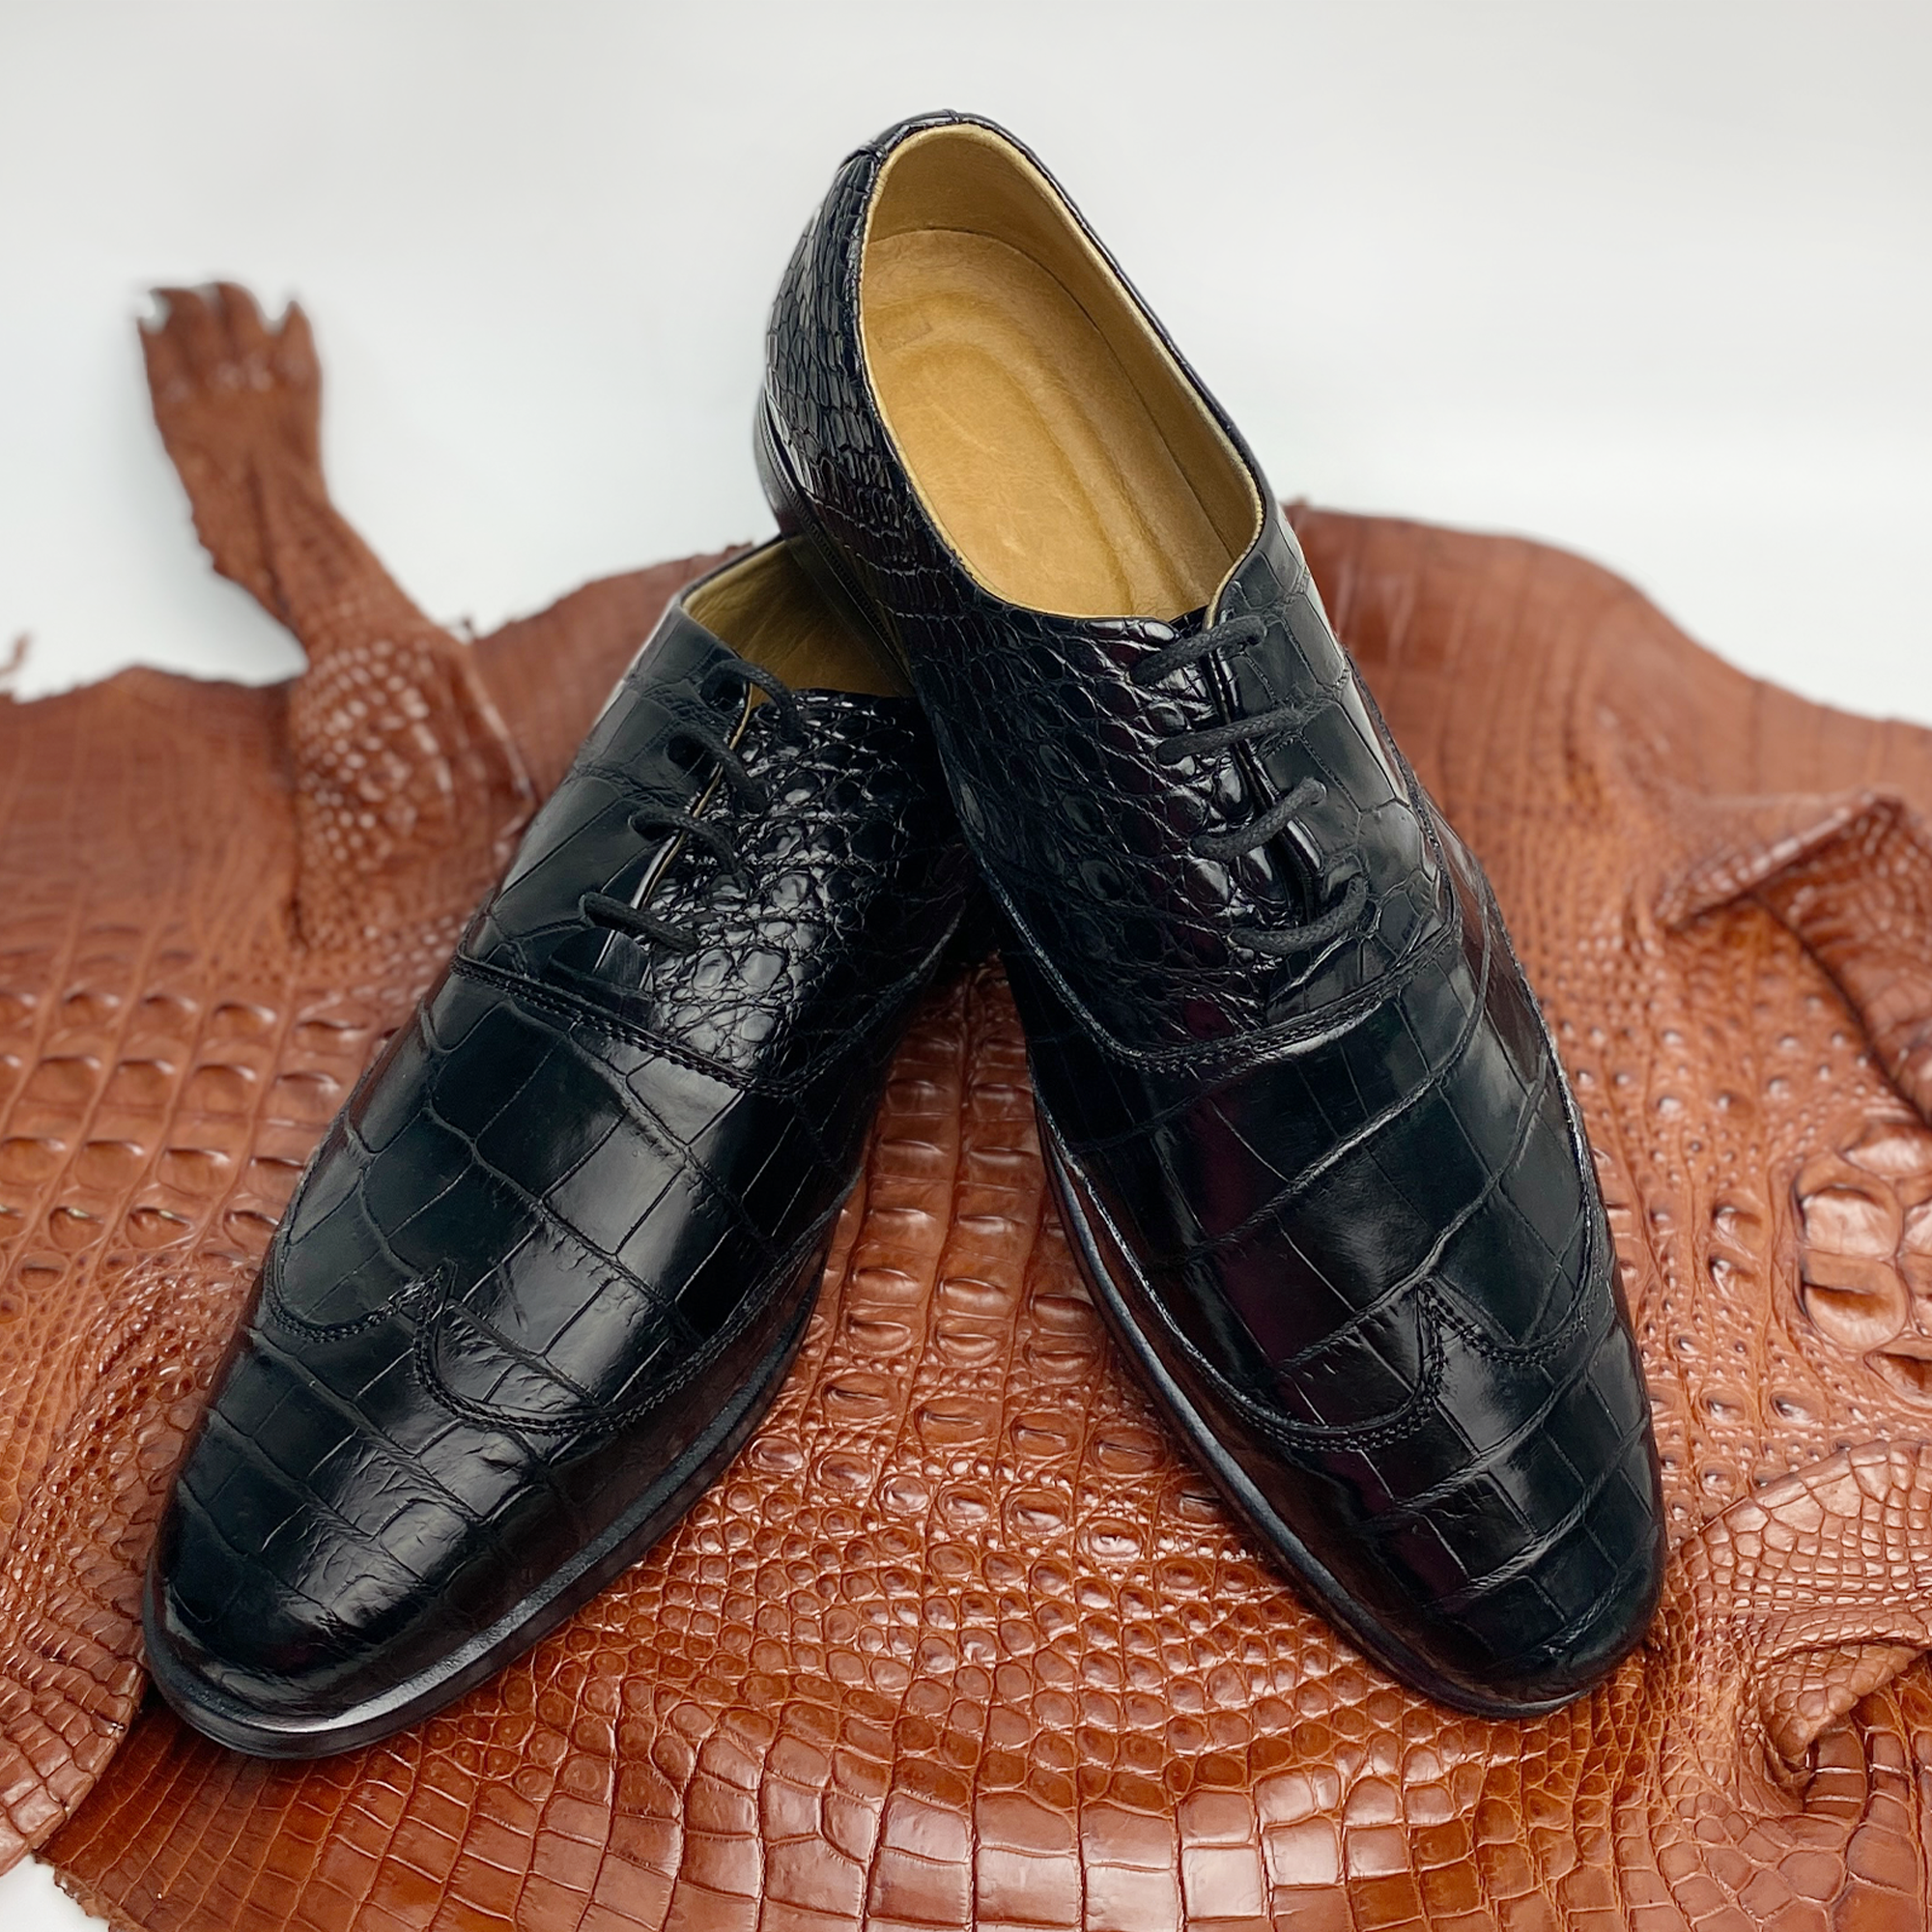 Mens Crocodile Leather Shoes